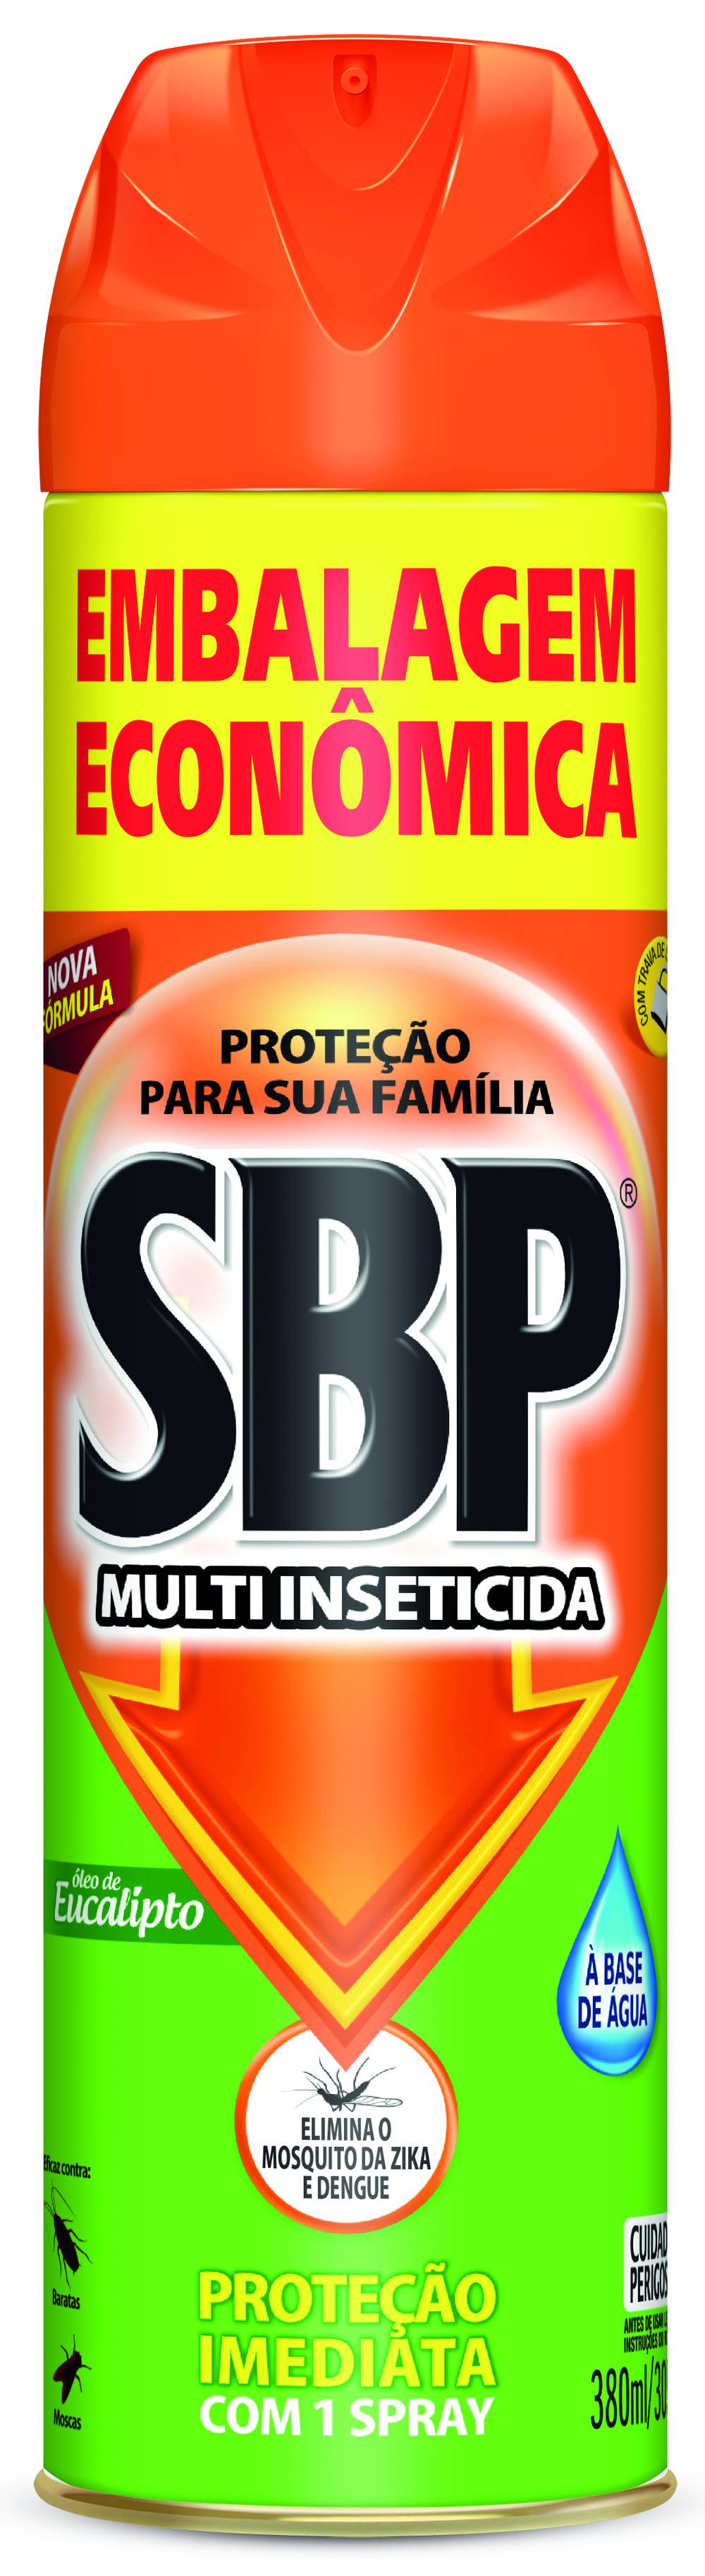 Sbp multi inseticida aerosol óleo de eucalipto embalagem econômica (380 ml)